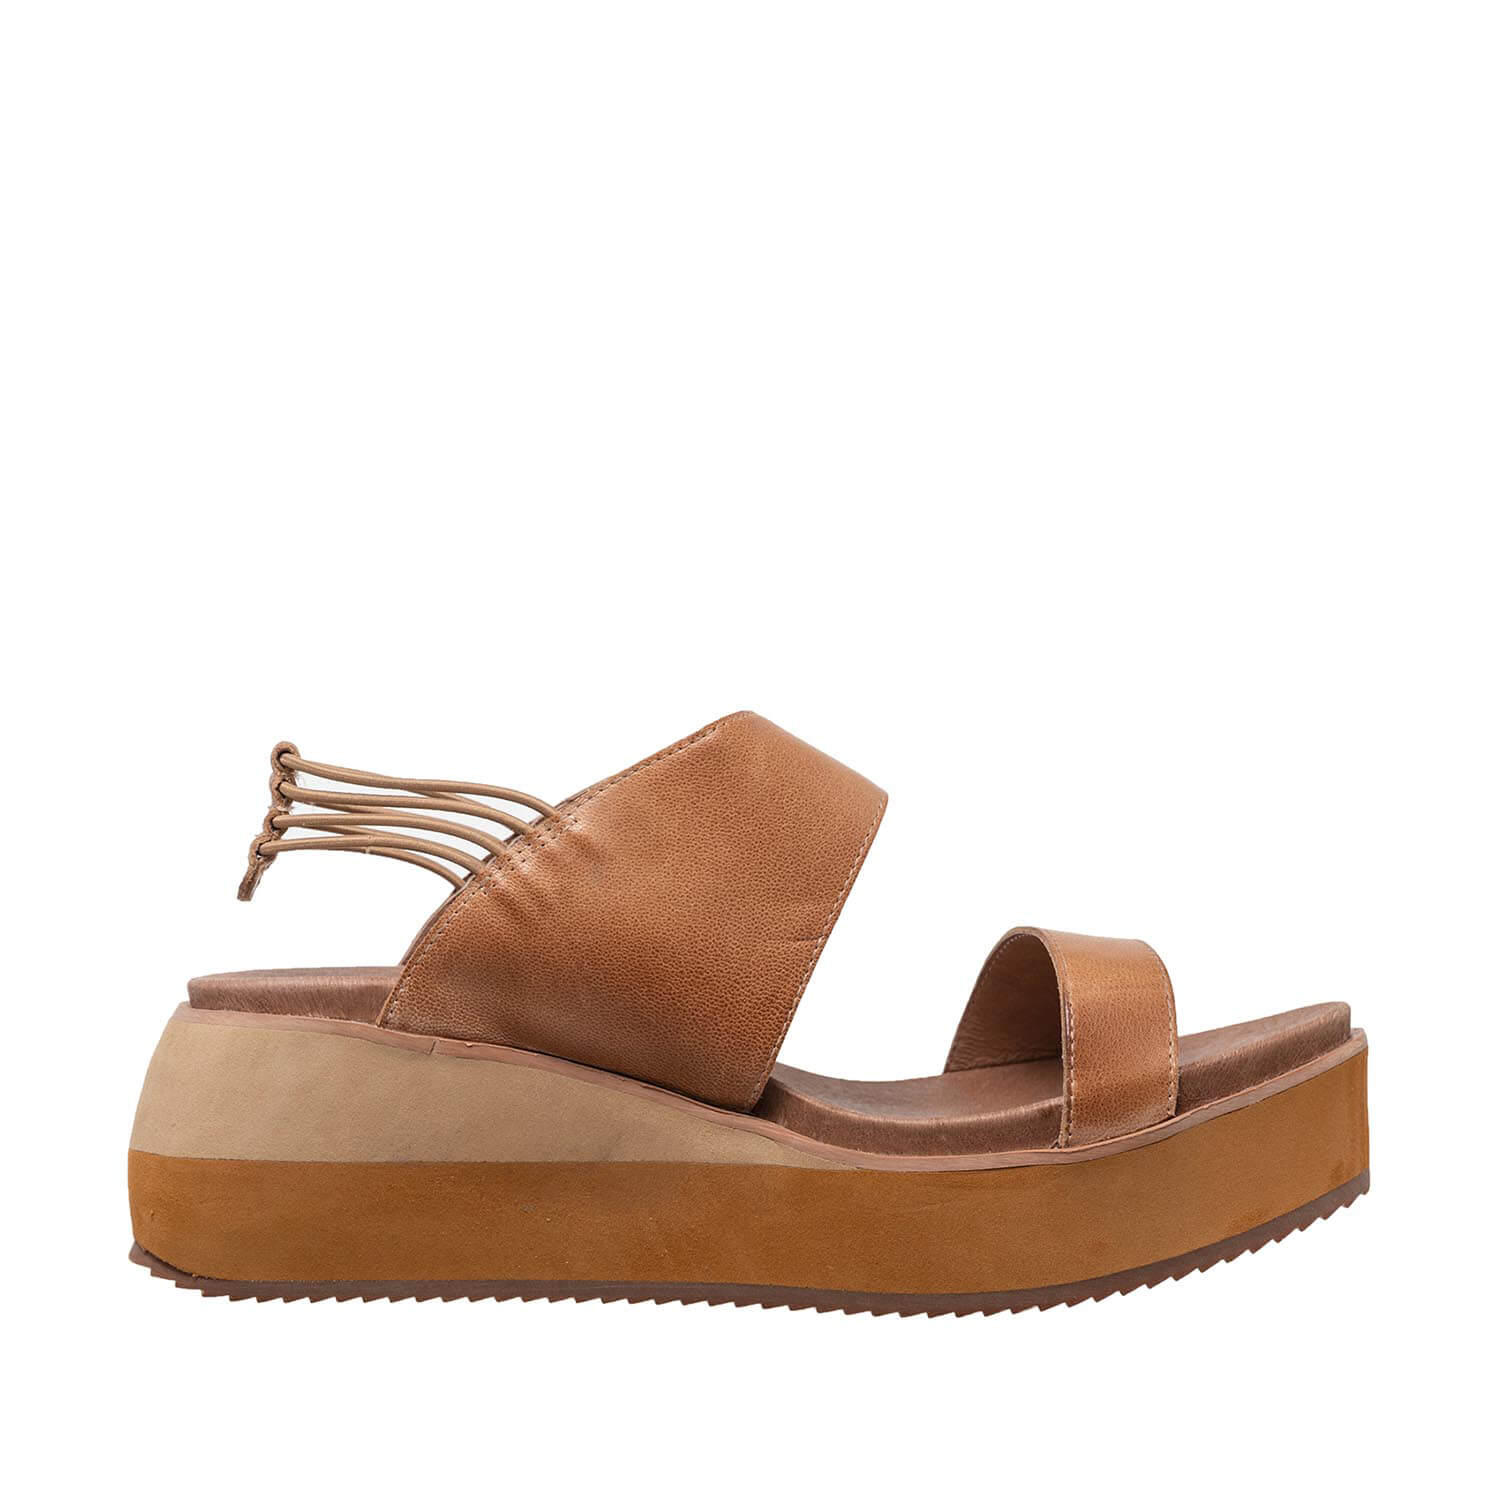 Summer Platform Wedge Sandals E10 Fanny